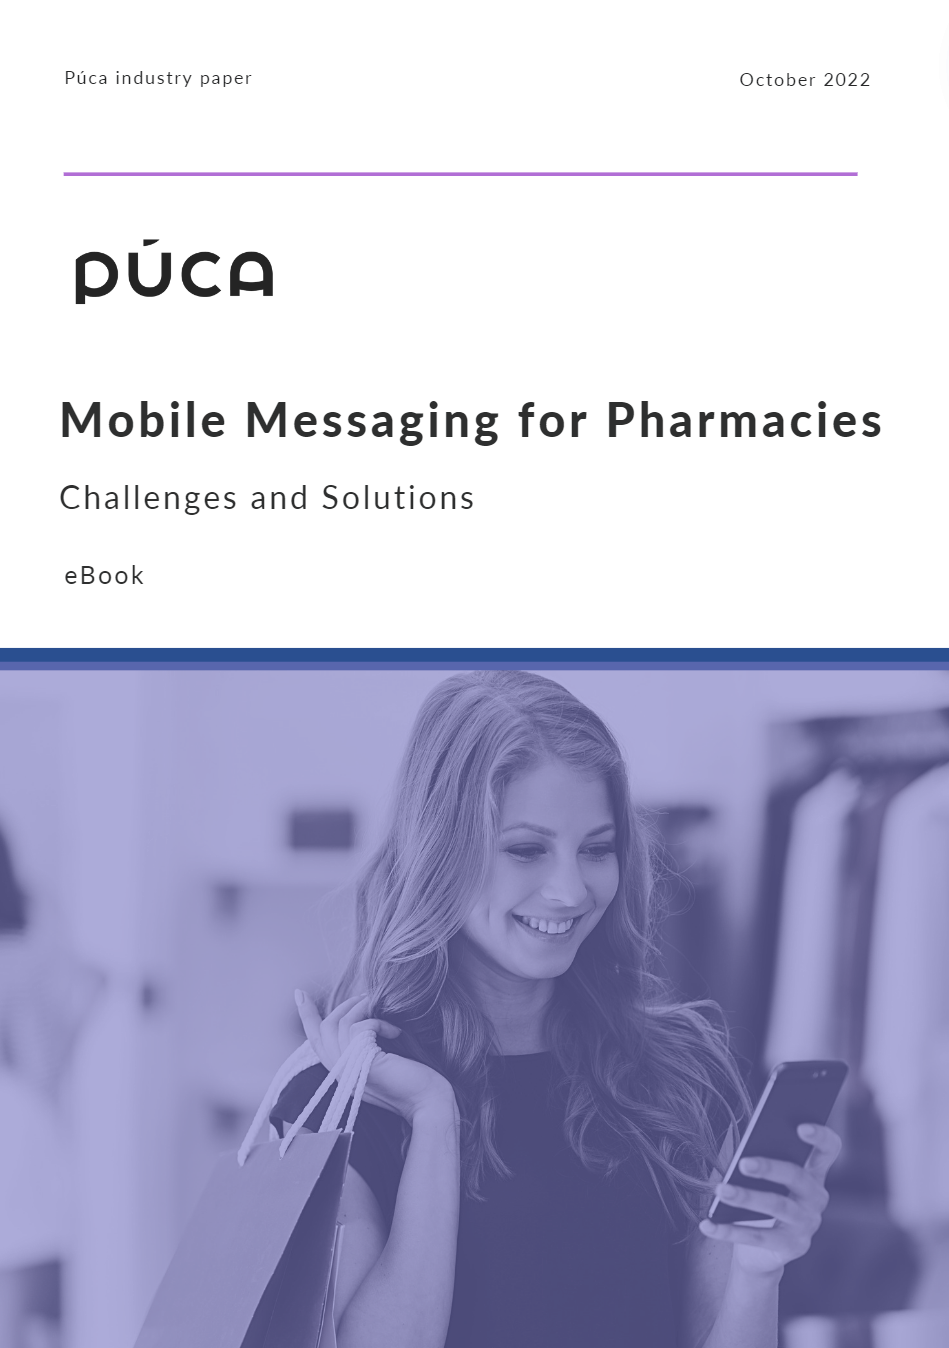 eBook: Mobile Messaging for Pharmacies